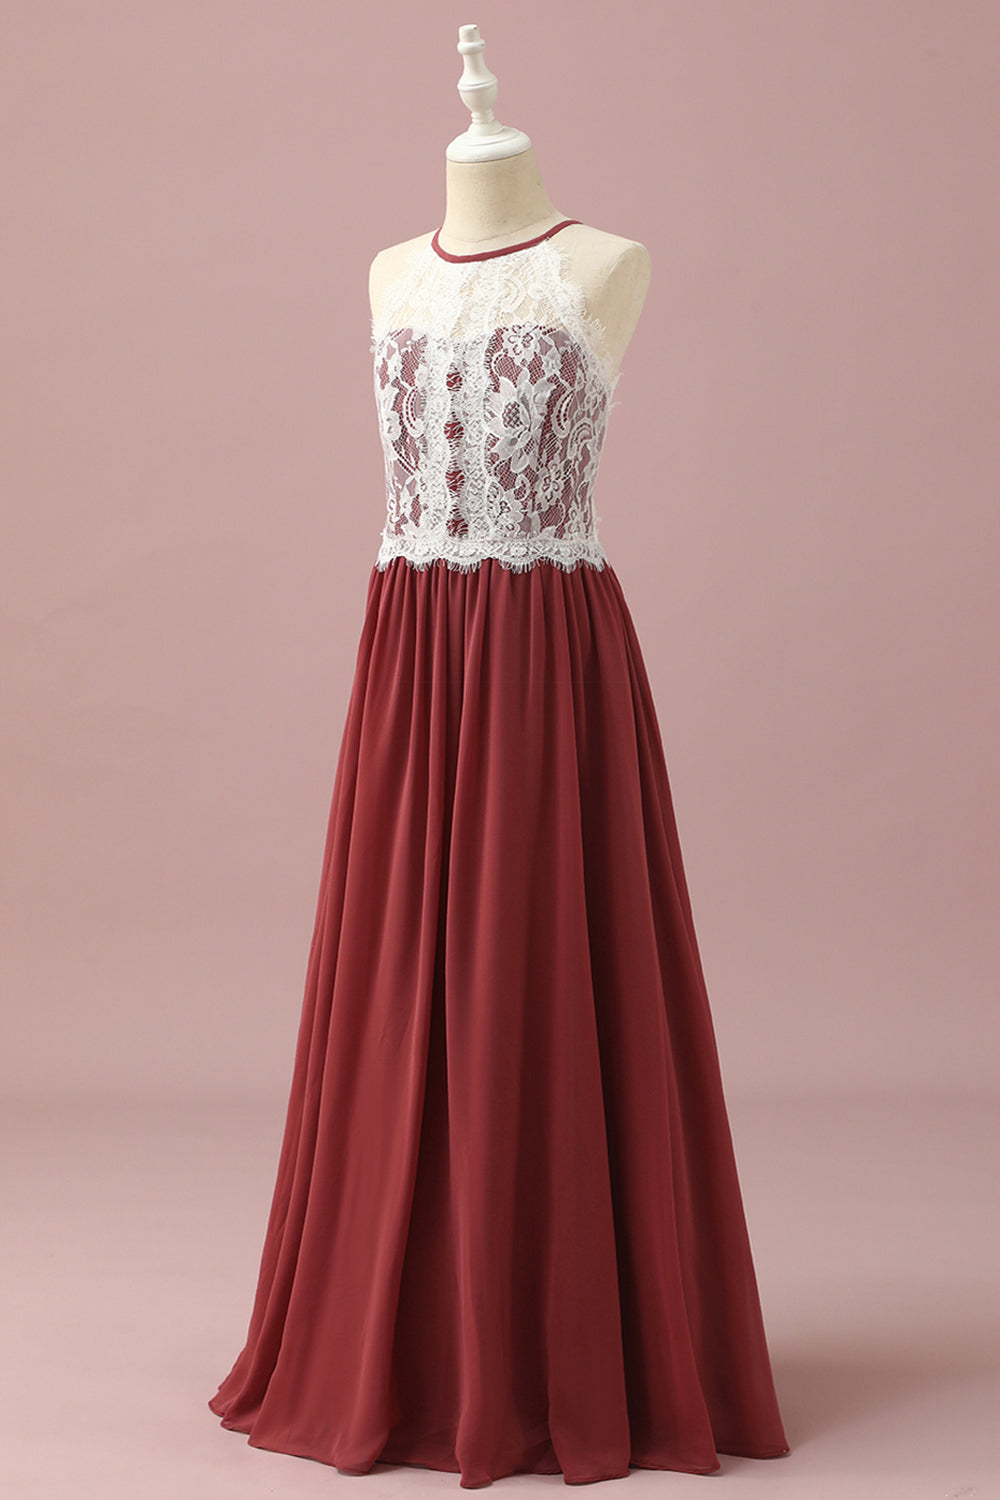 Burgundy A-Line Halter Floor Length Junior Bridesmaid Dress With Floral Lace